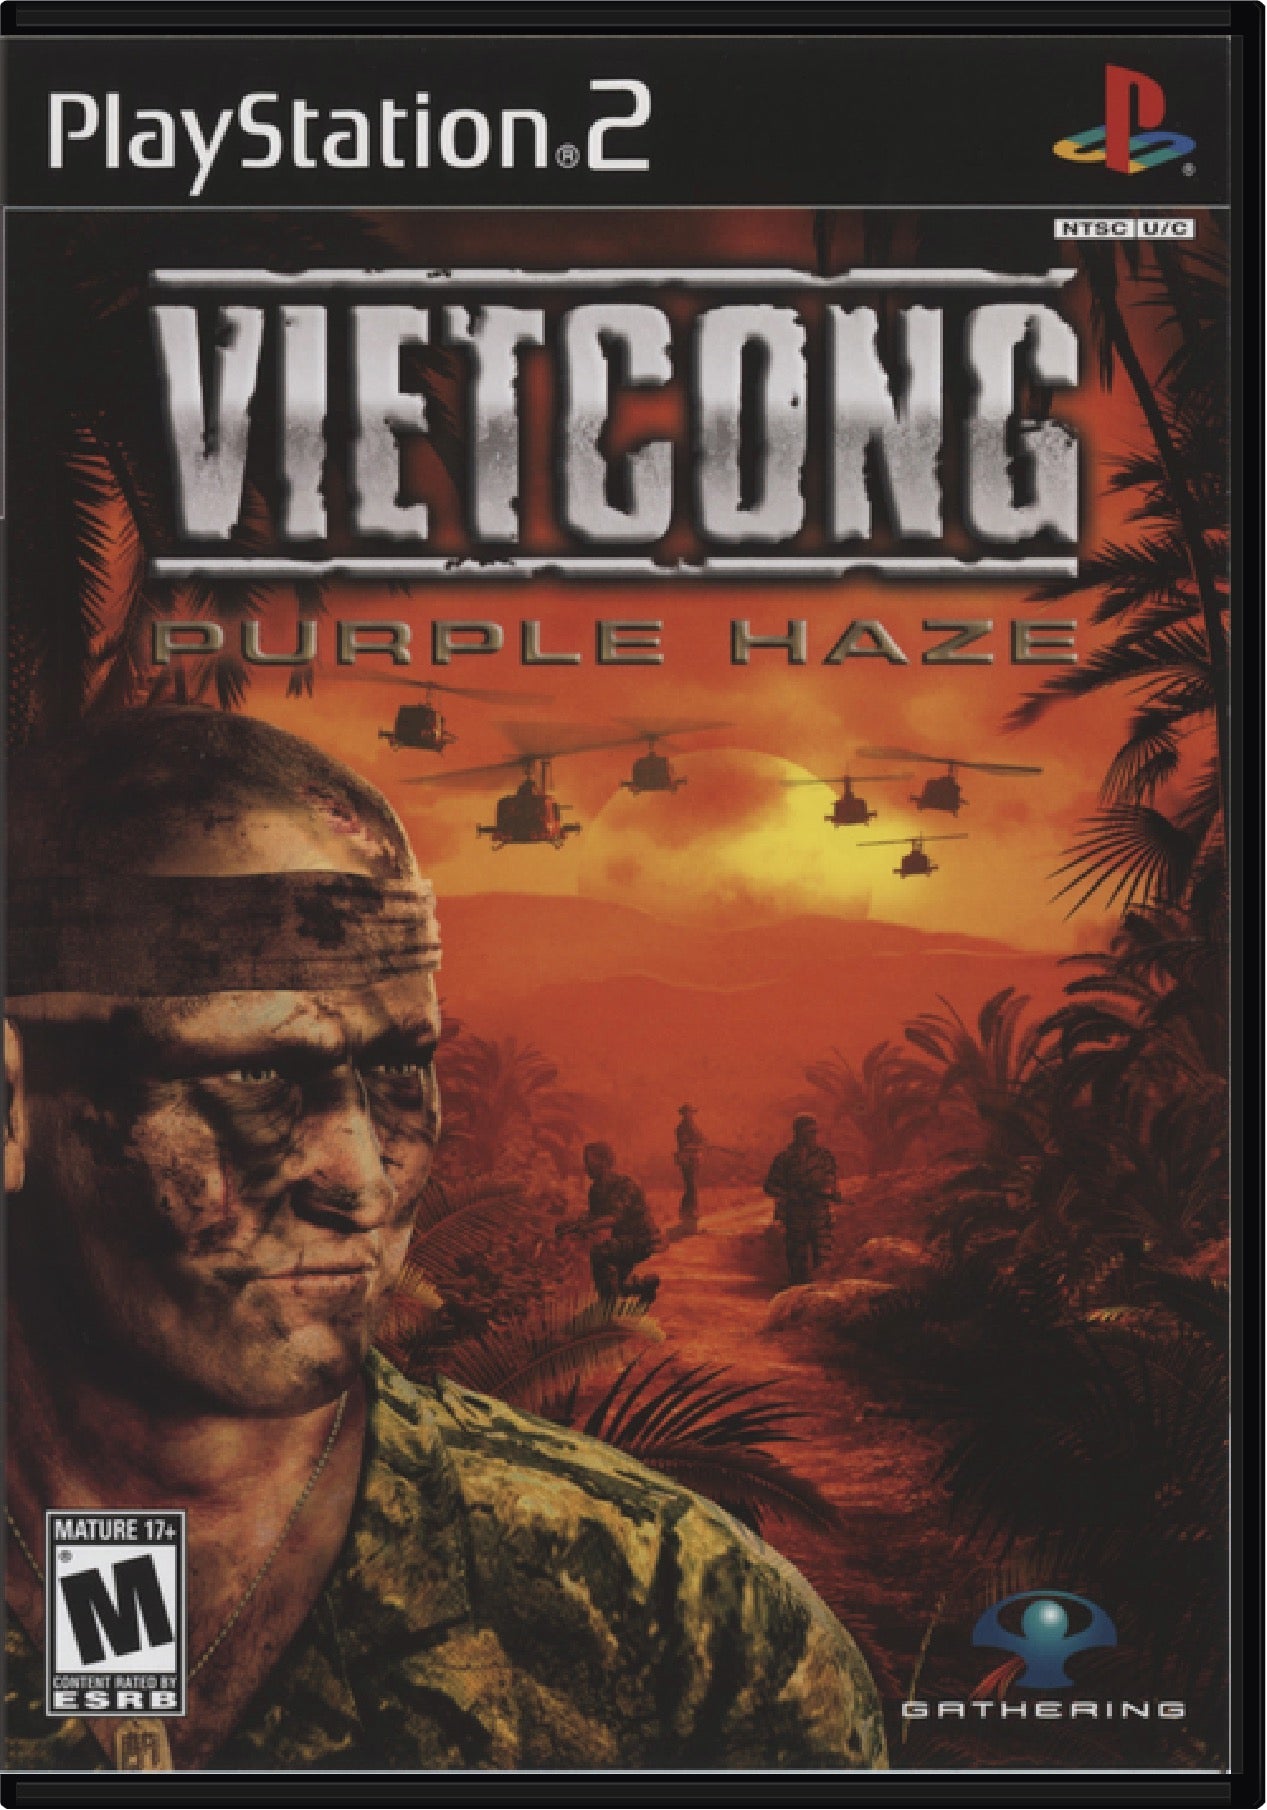 Vietcong Purple Haze Cover Art and Product Photo